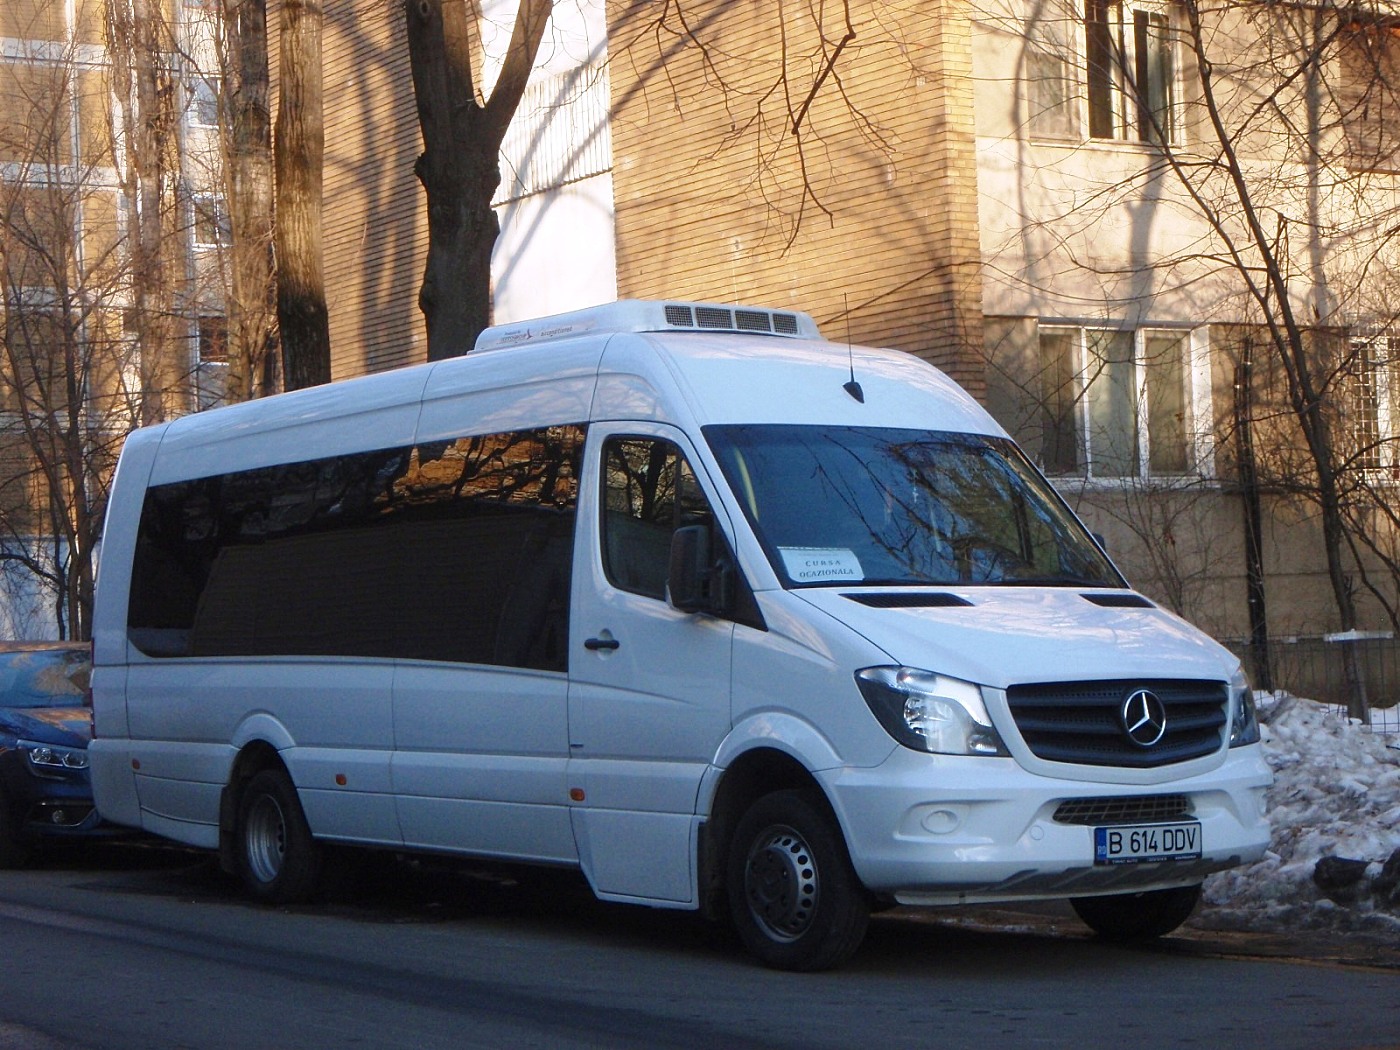 Mercedes-Benz 519 CDI #B 614 DDV